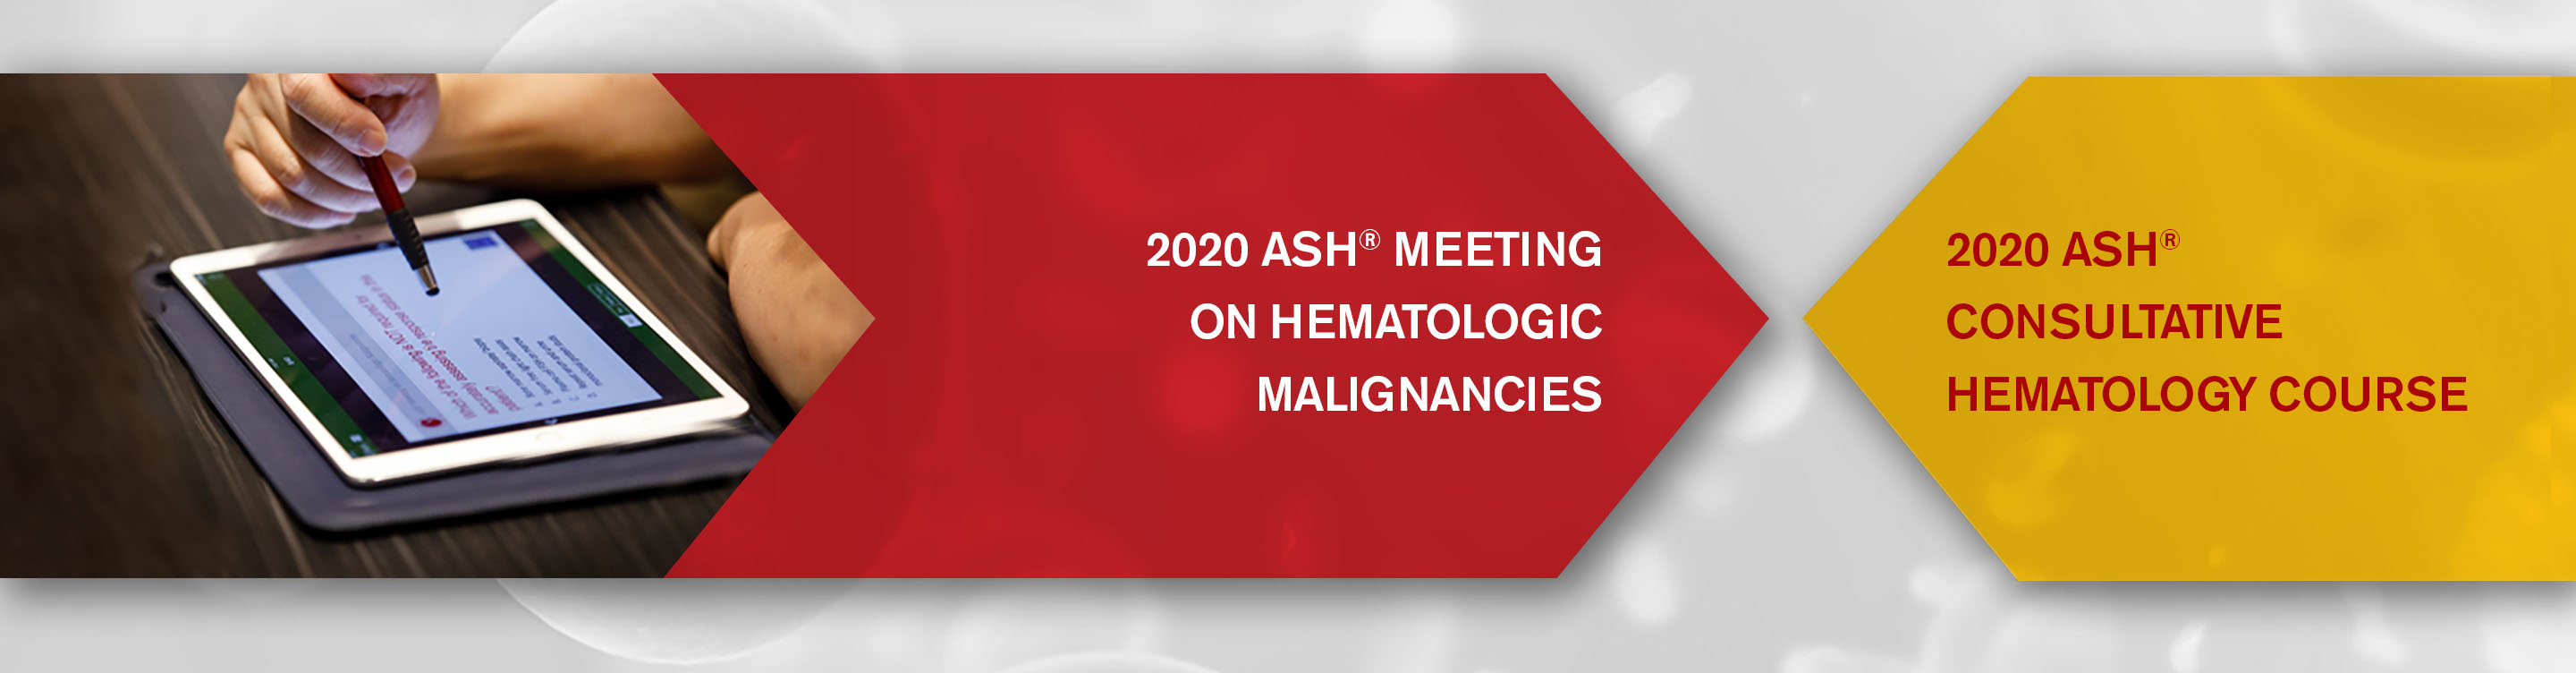 ASH Meeting on Hematologic Malignancies